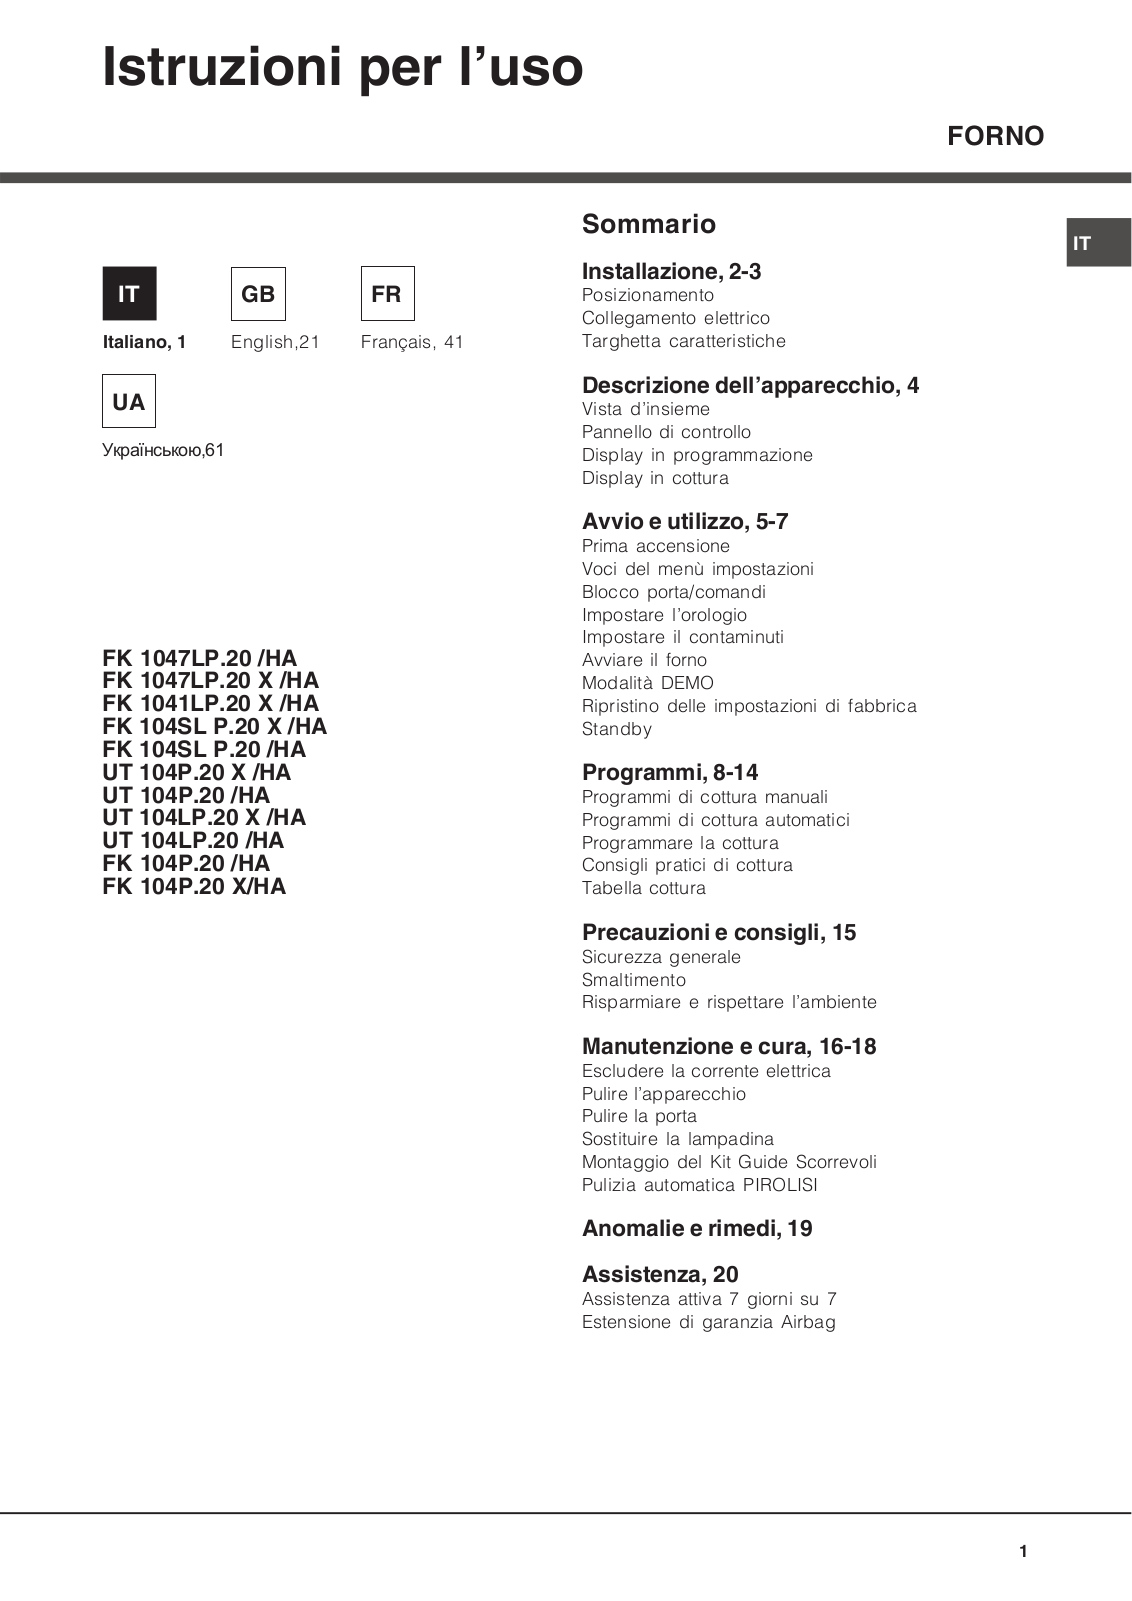 HOTPOINT FK104P20, FK1047LP20 User Manual